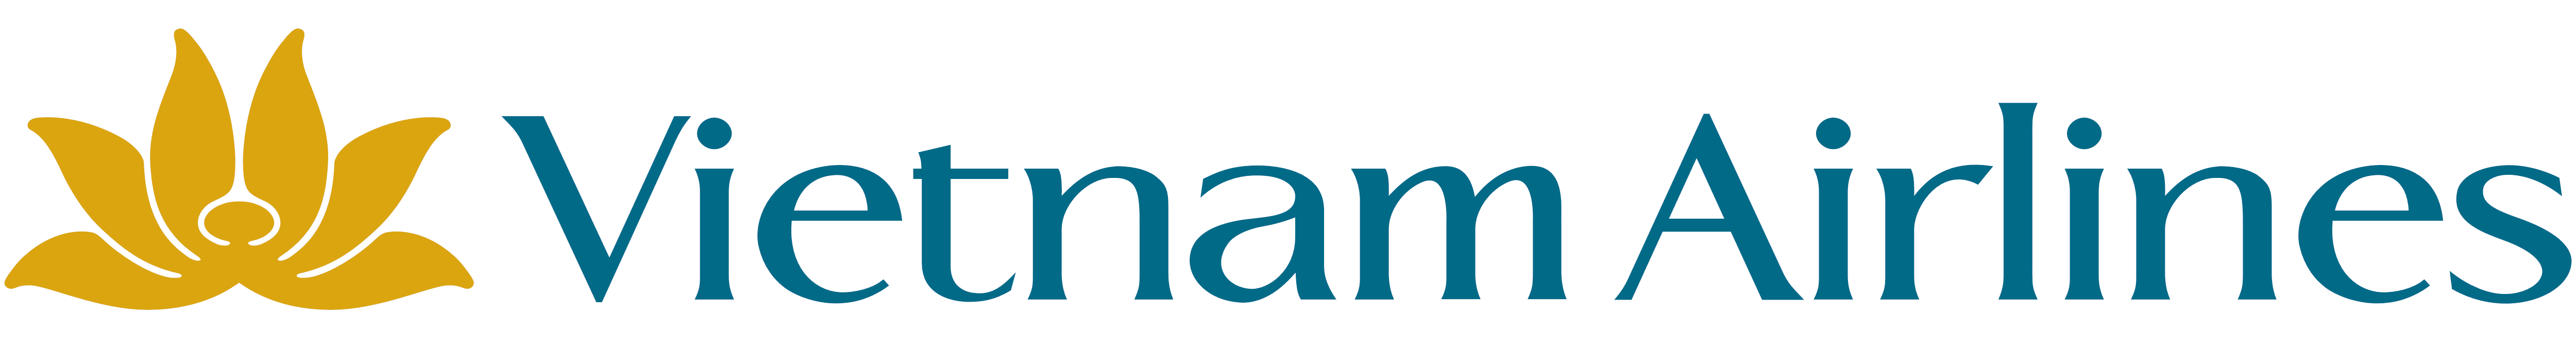 Vietnam Airlines – Logos Download